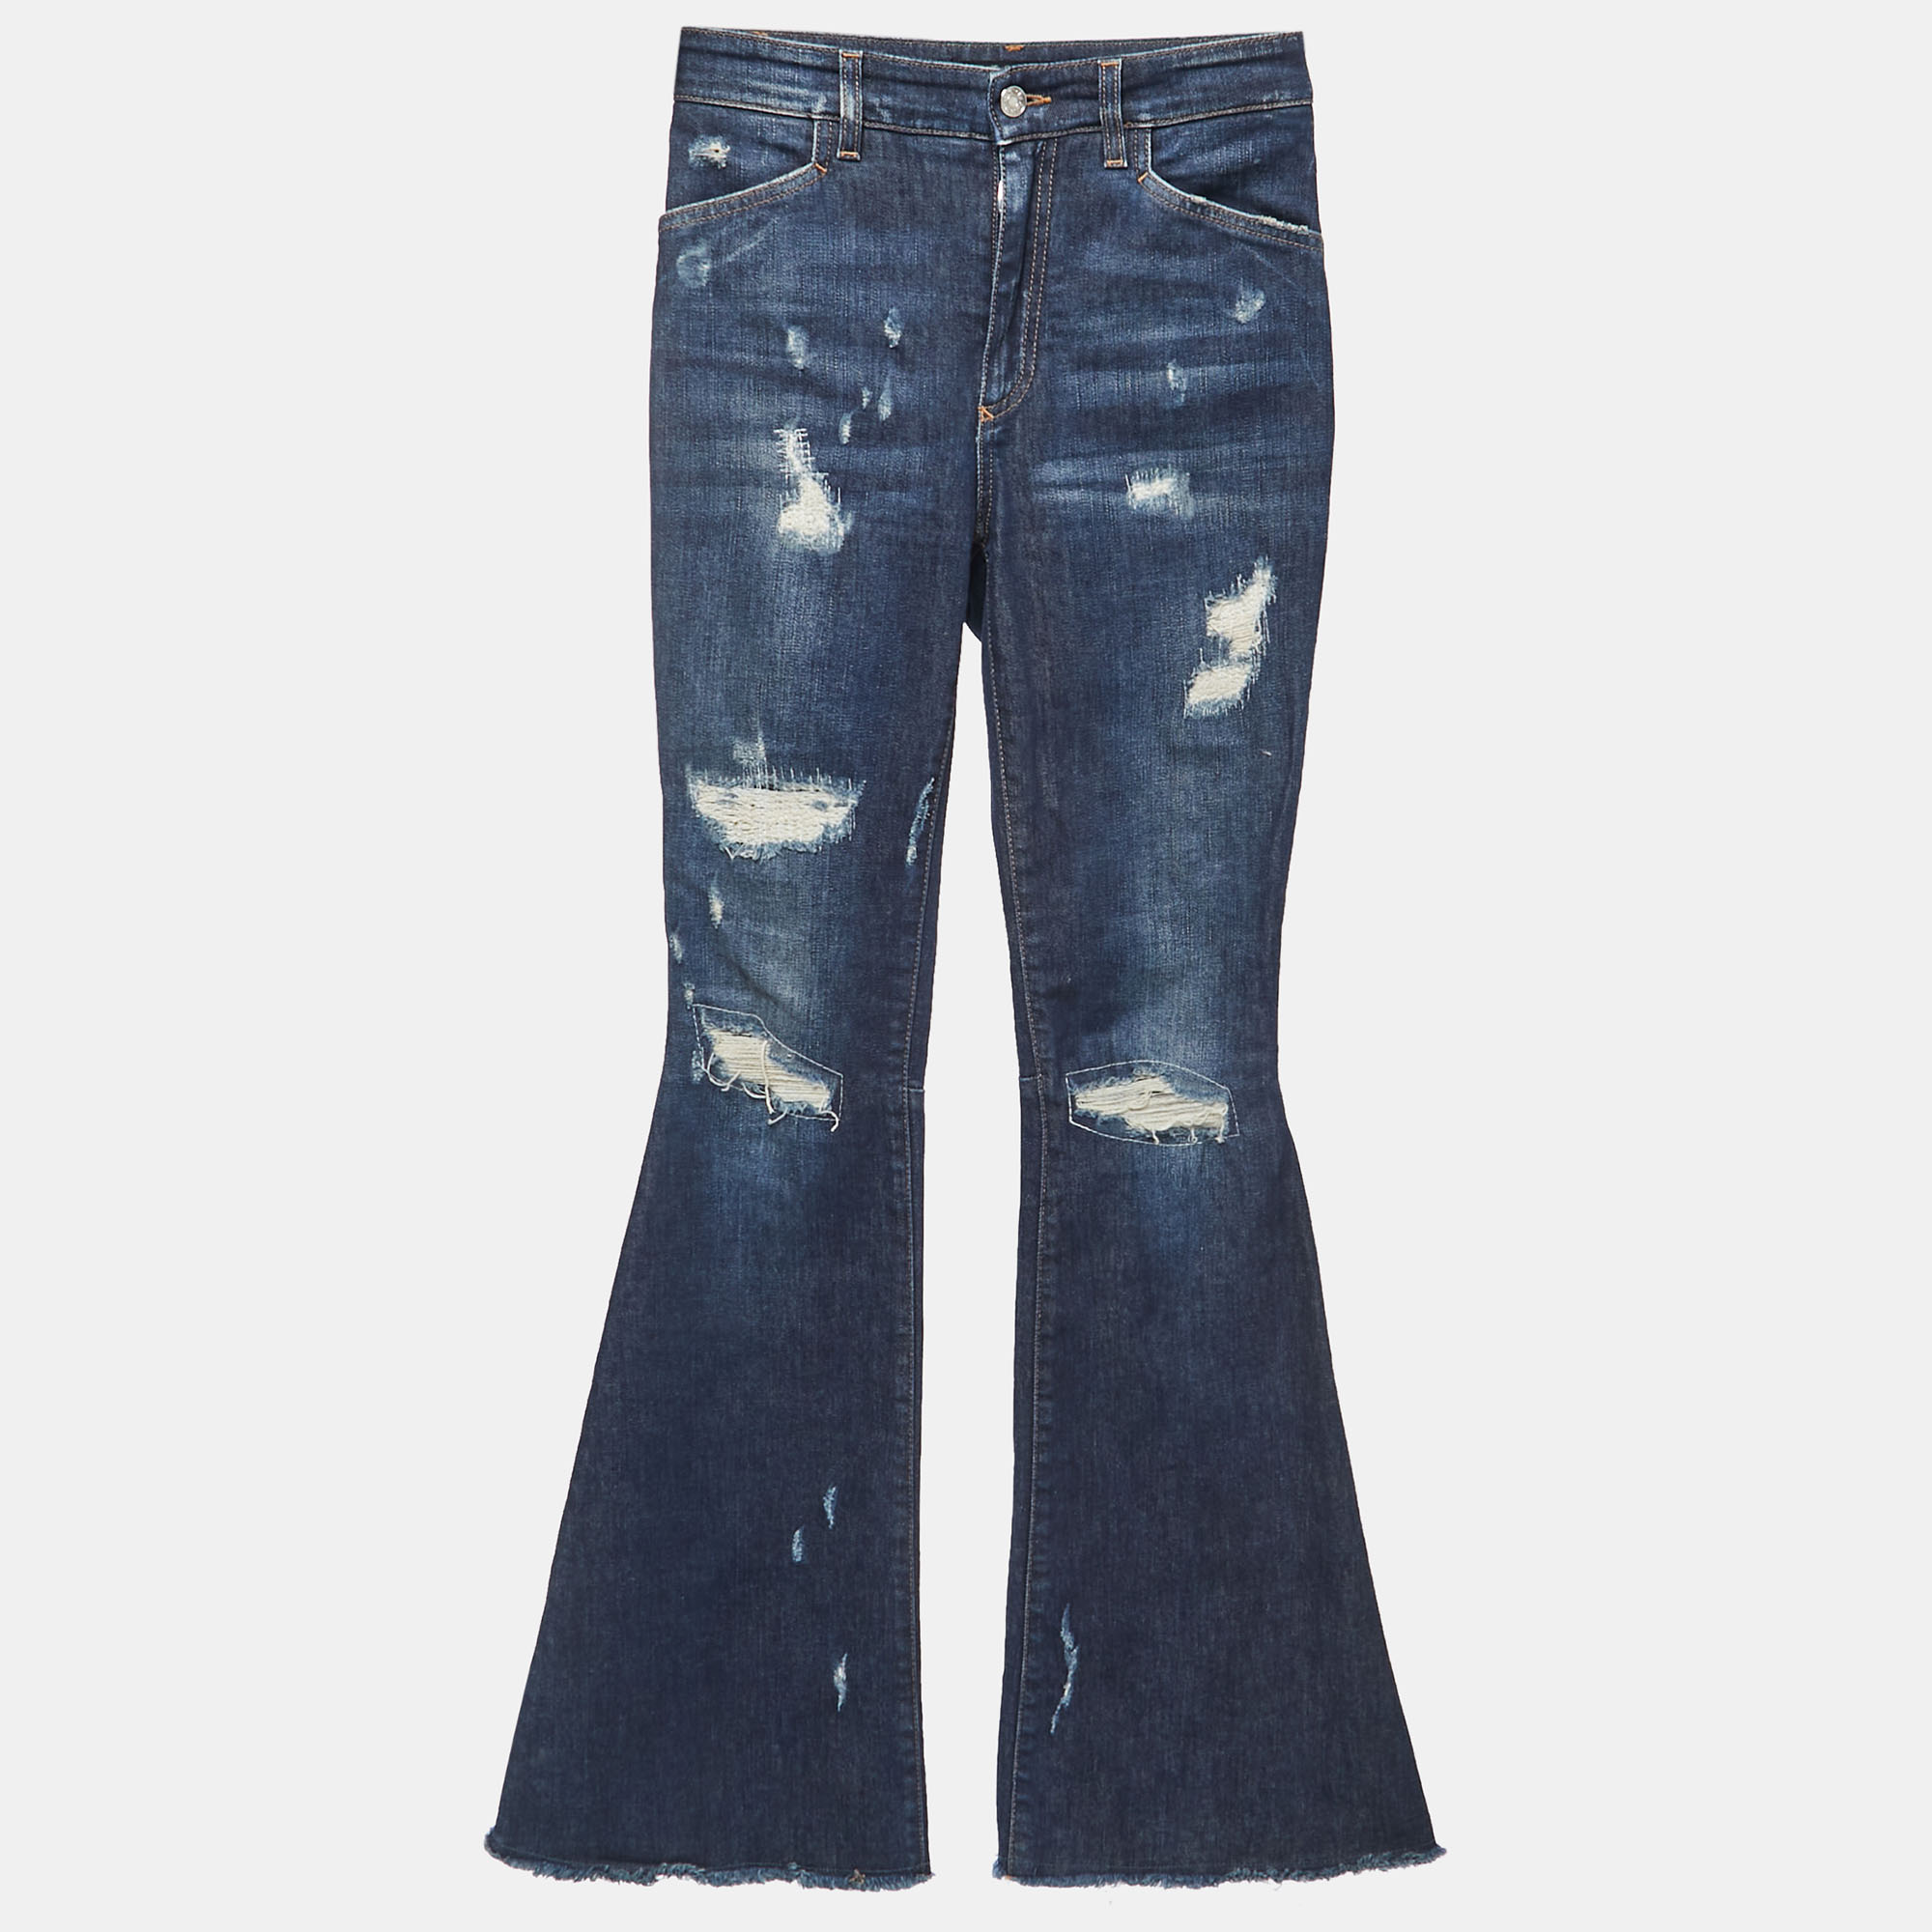 Dolce & gabbana blue denim flared embroidered jeans s waist 27"